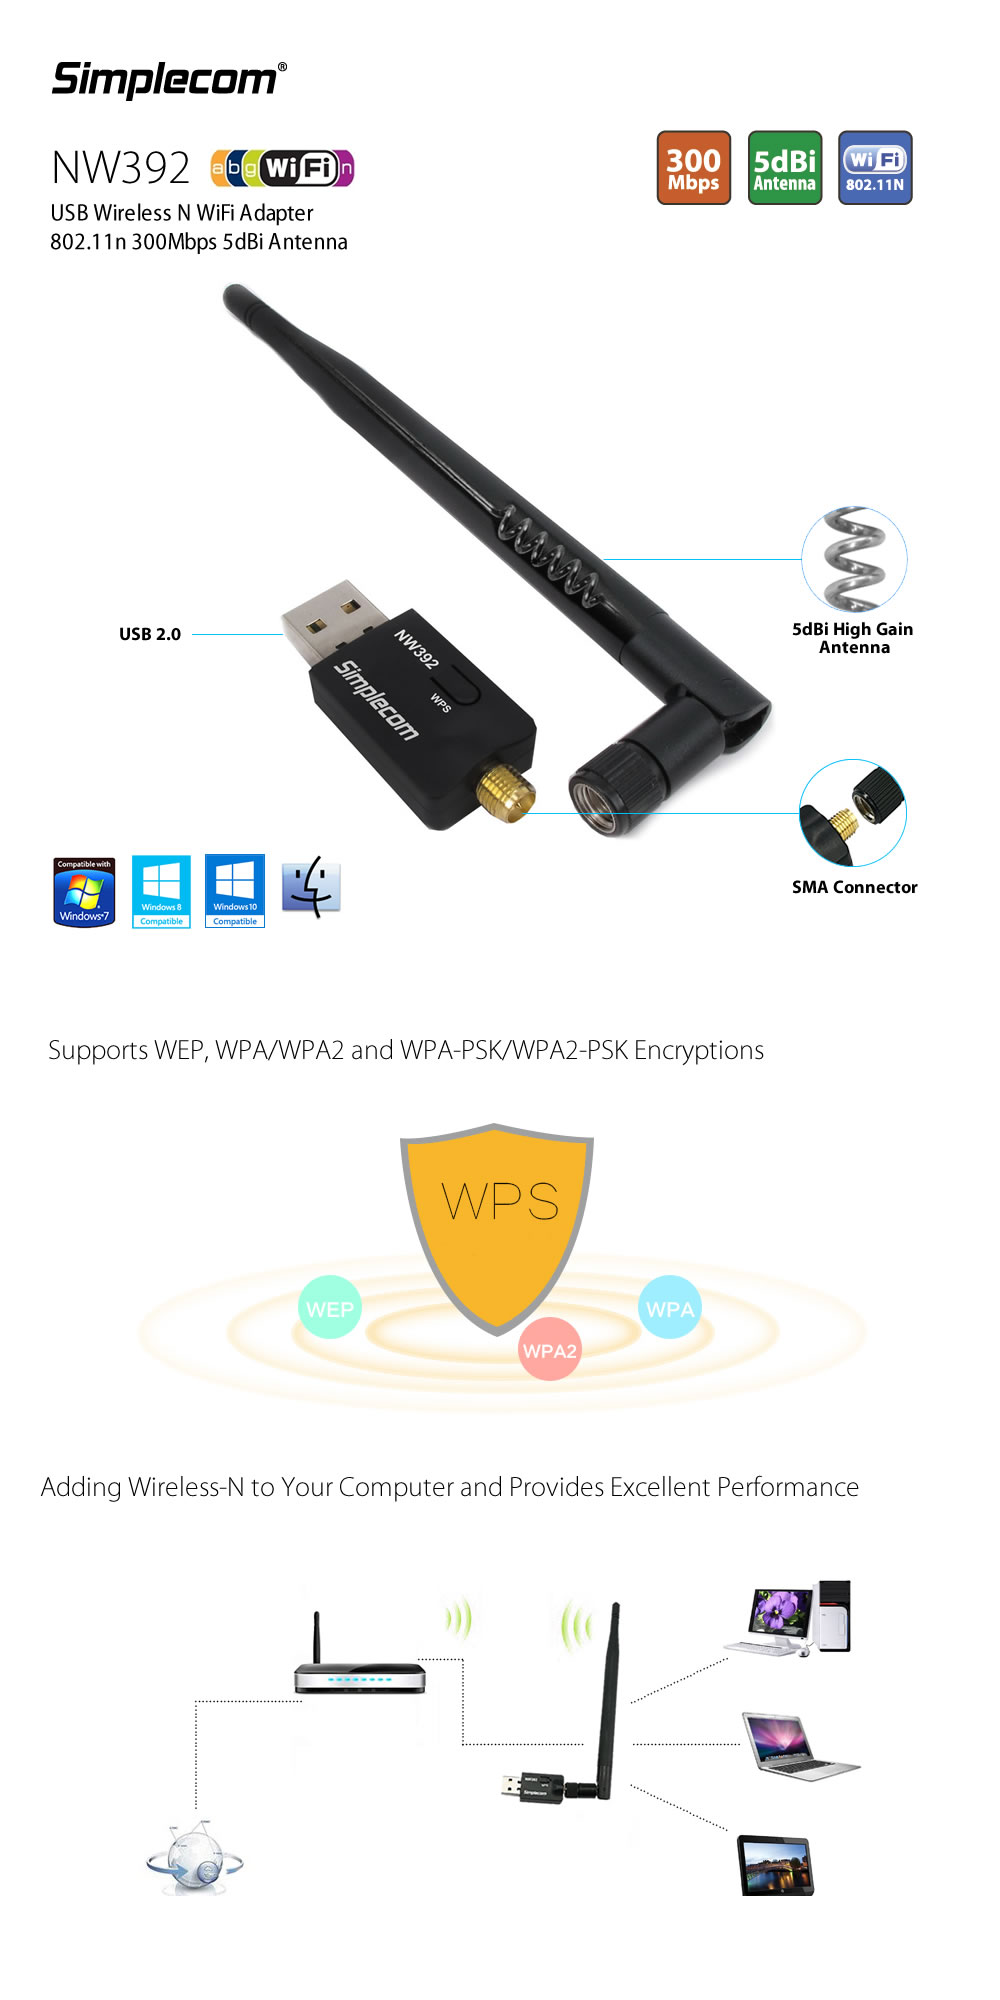 Simplecom NW392 USB Wireless N WiFi Adapter 802.11n 300Mbps 5dBi Antenna 1